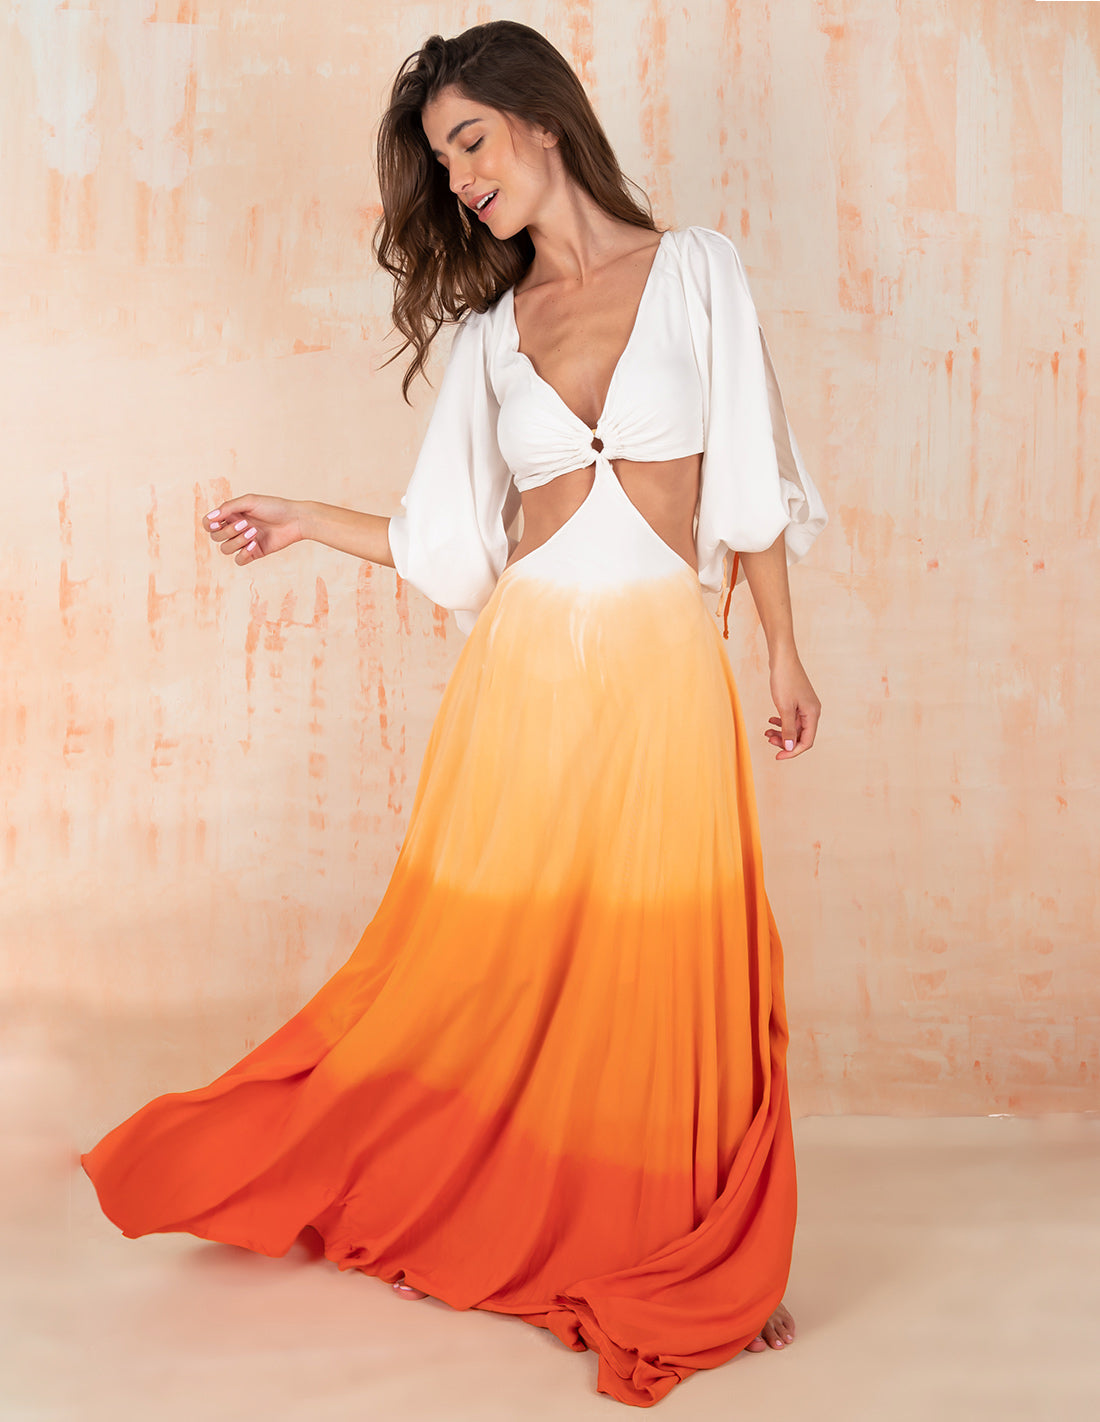 Guajira Dress Ivory + Tangerine. Hand-Dyed Dress In Ivory + Tangerine. Entreaguas